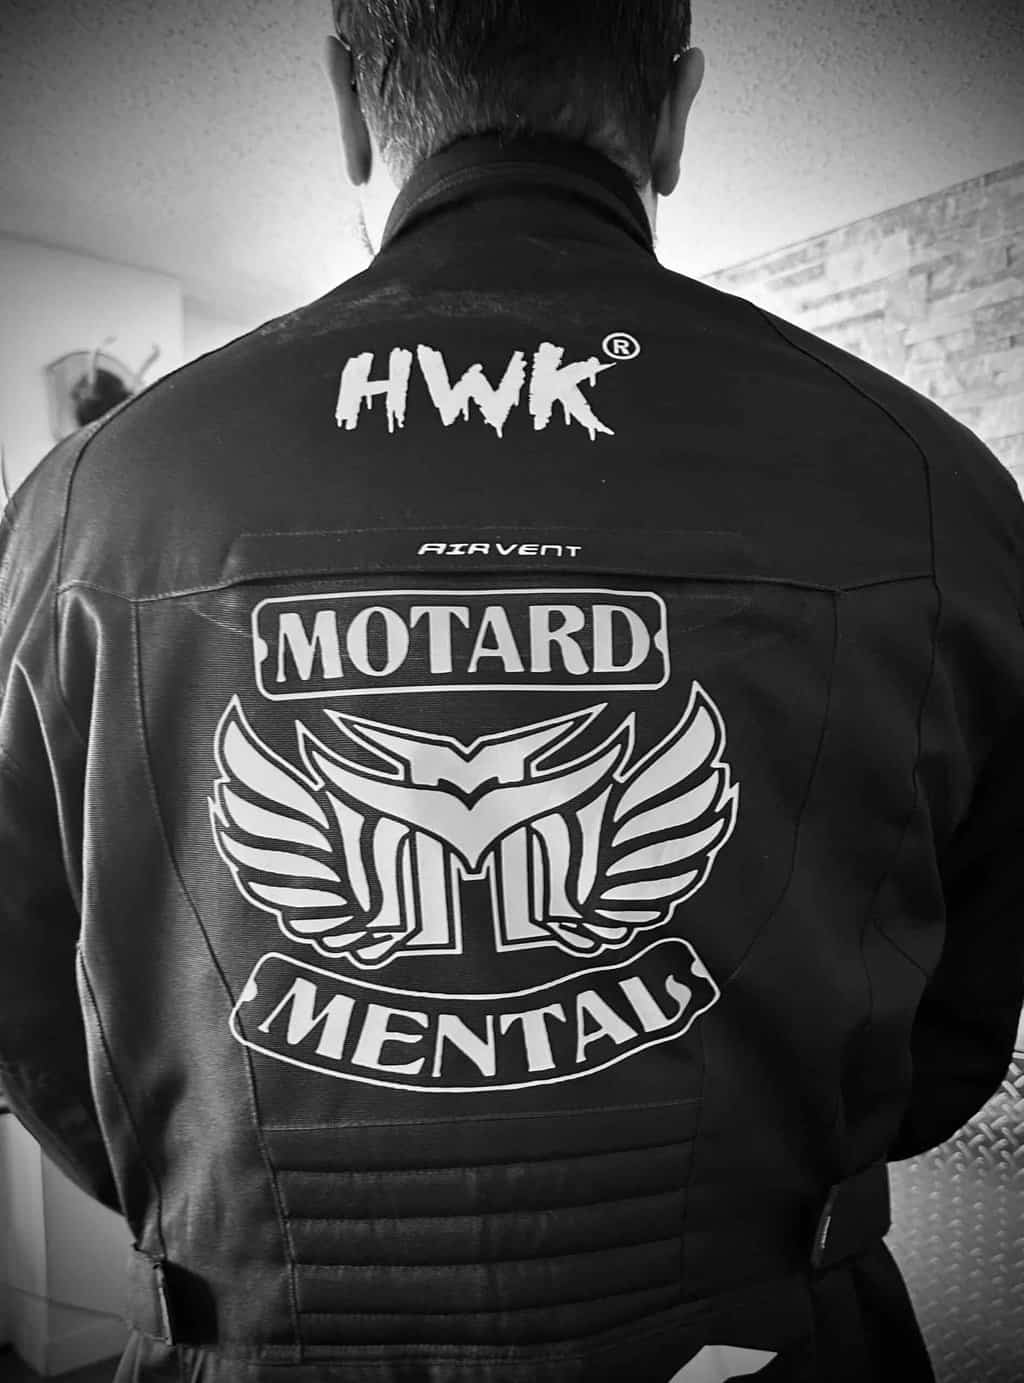 HWK adventure motorcycle jackets and pants